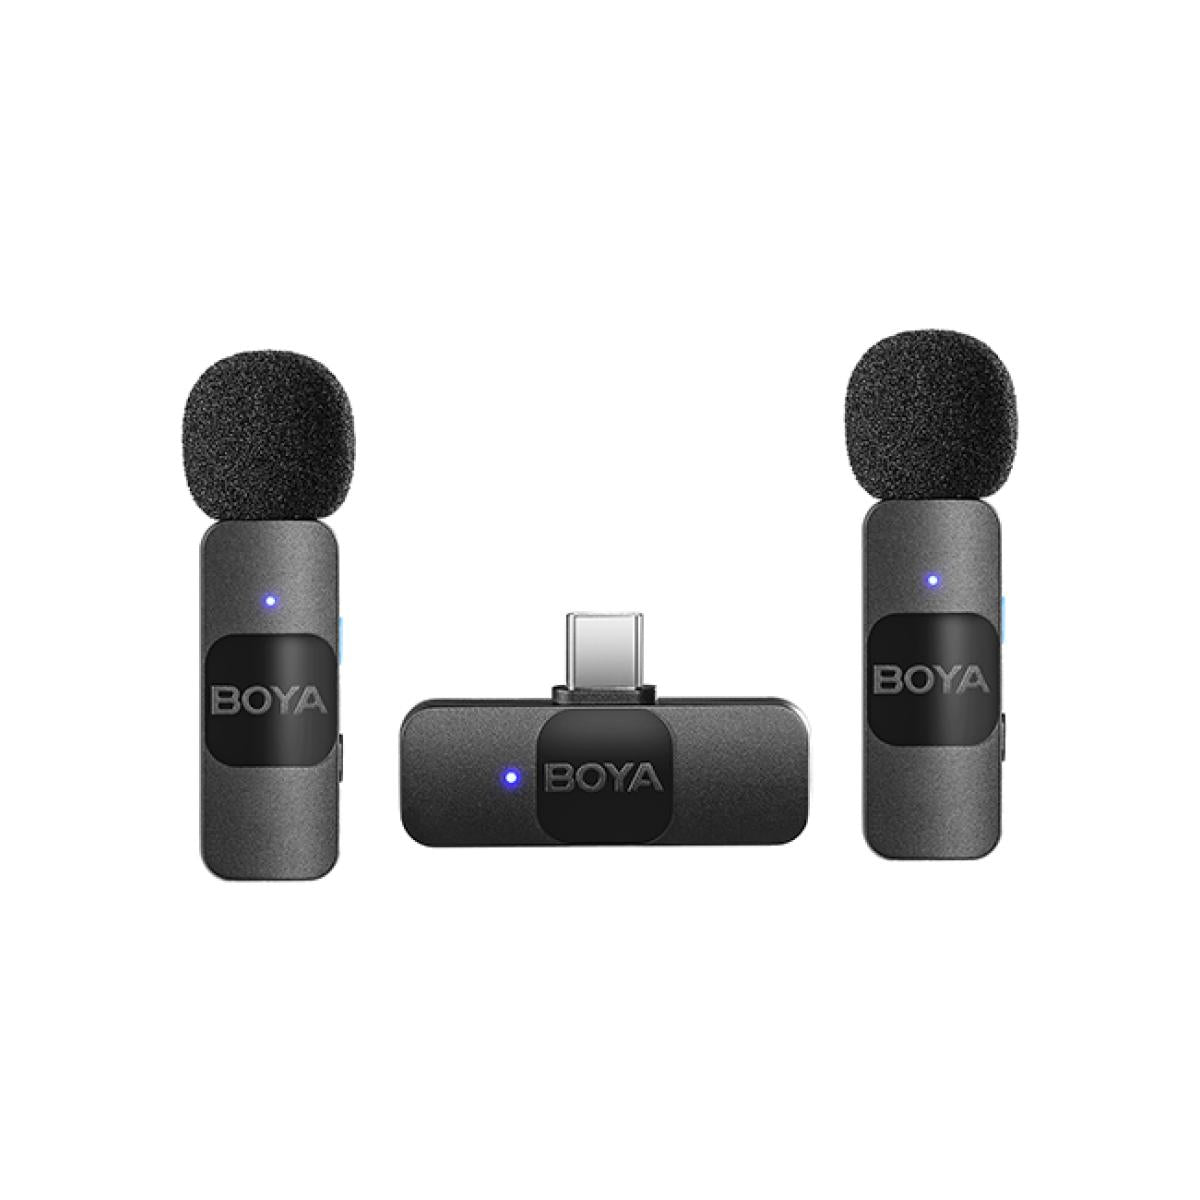 BOYA Ultracompact 2.4GHz Type-C Wireless Microphone System - Black